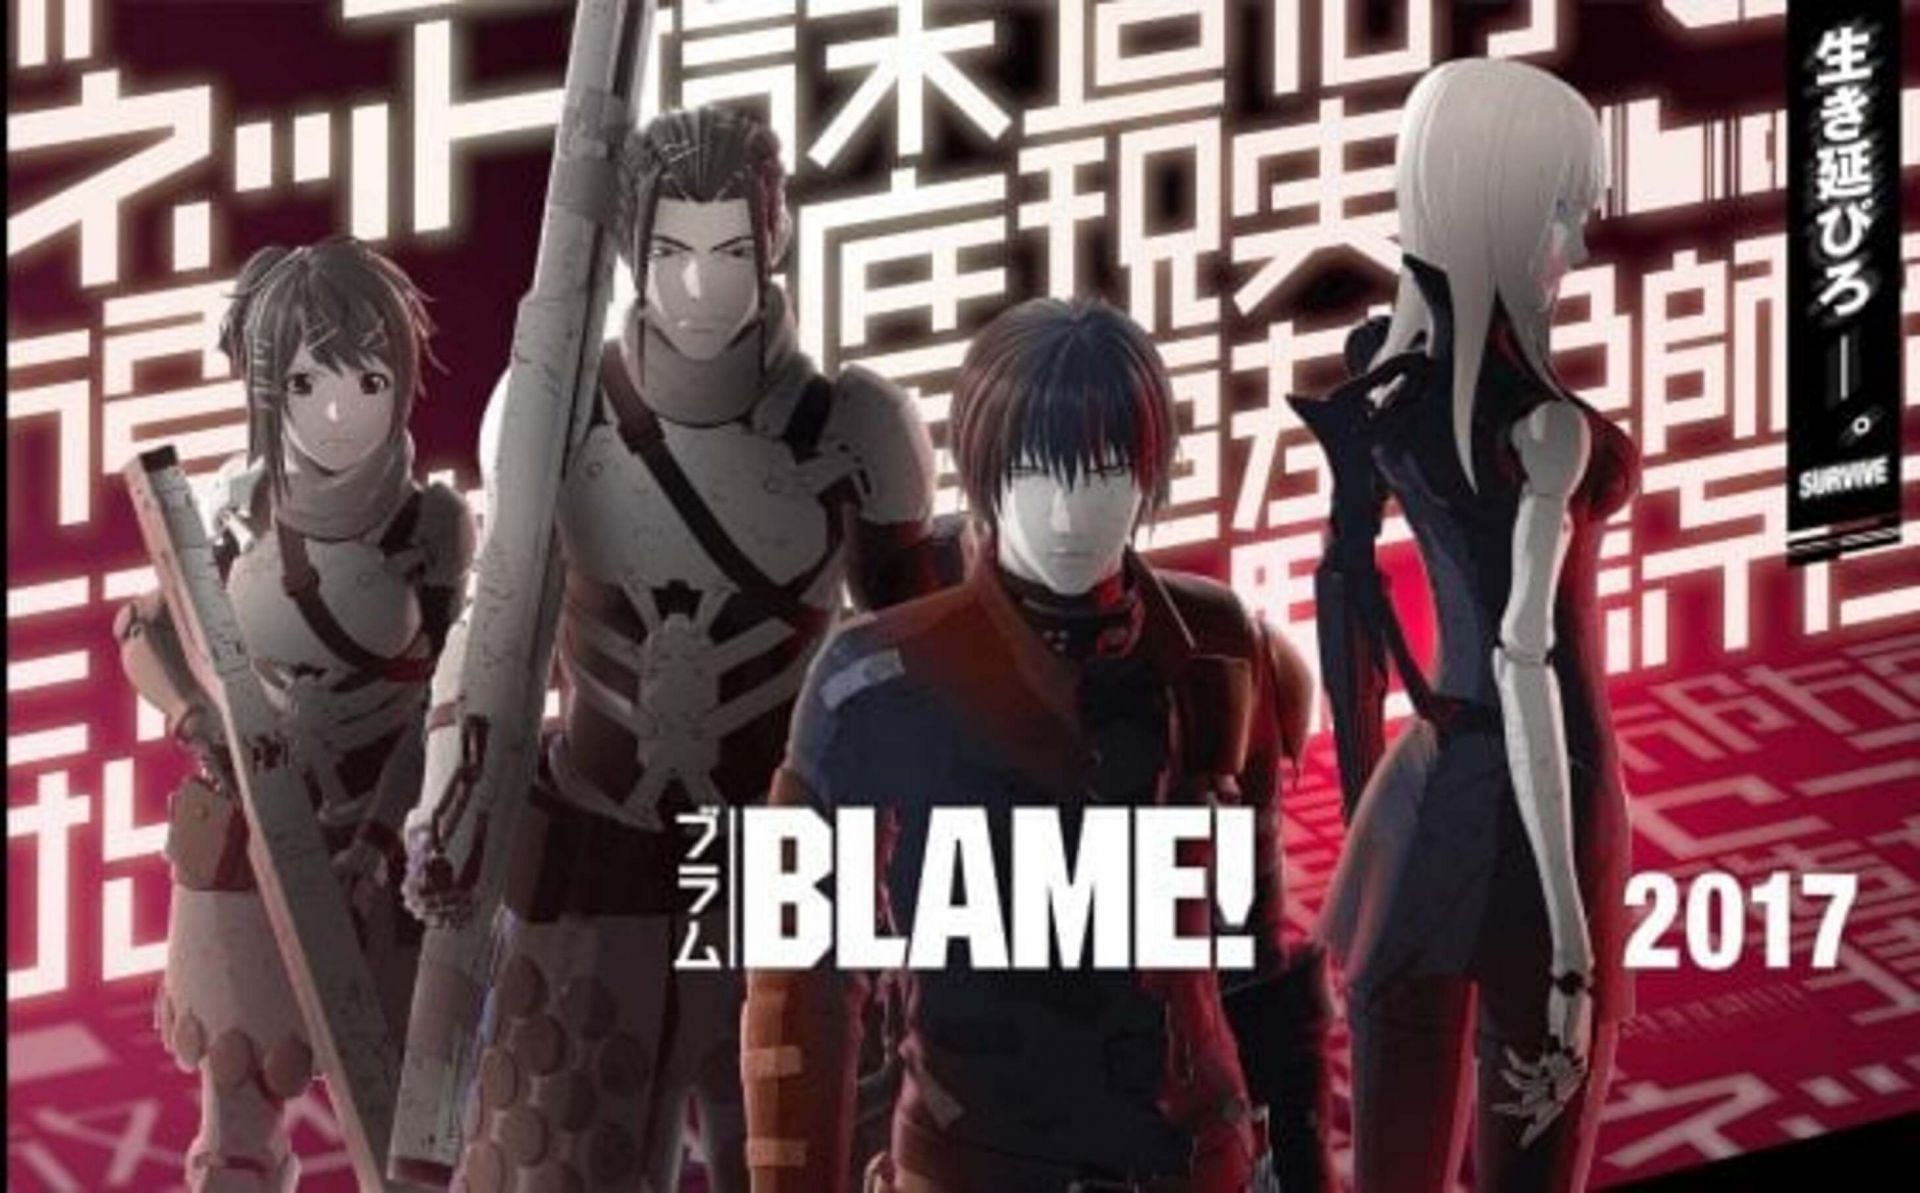 Blame! (Image via Polygon Pictures)